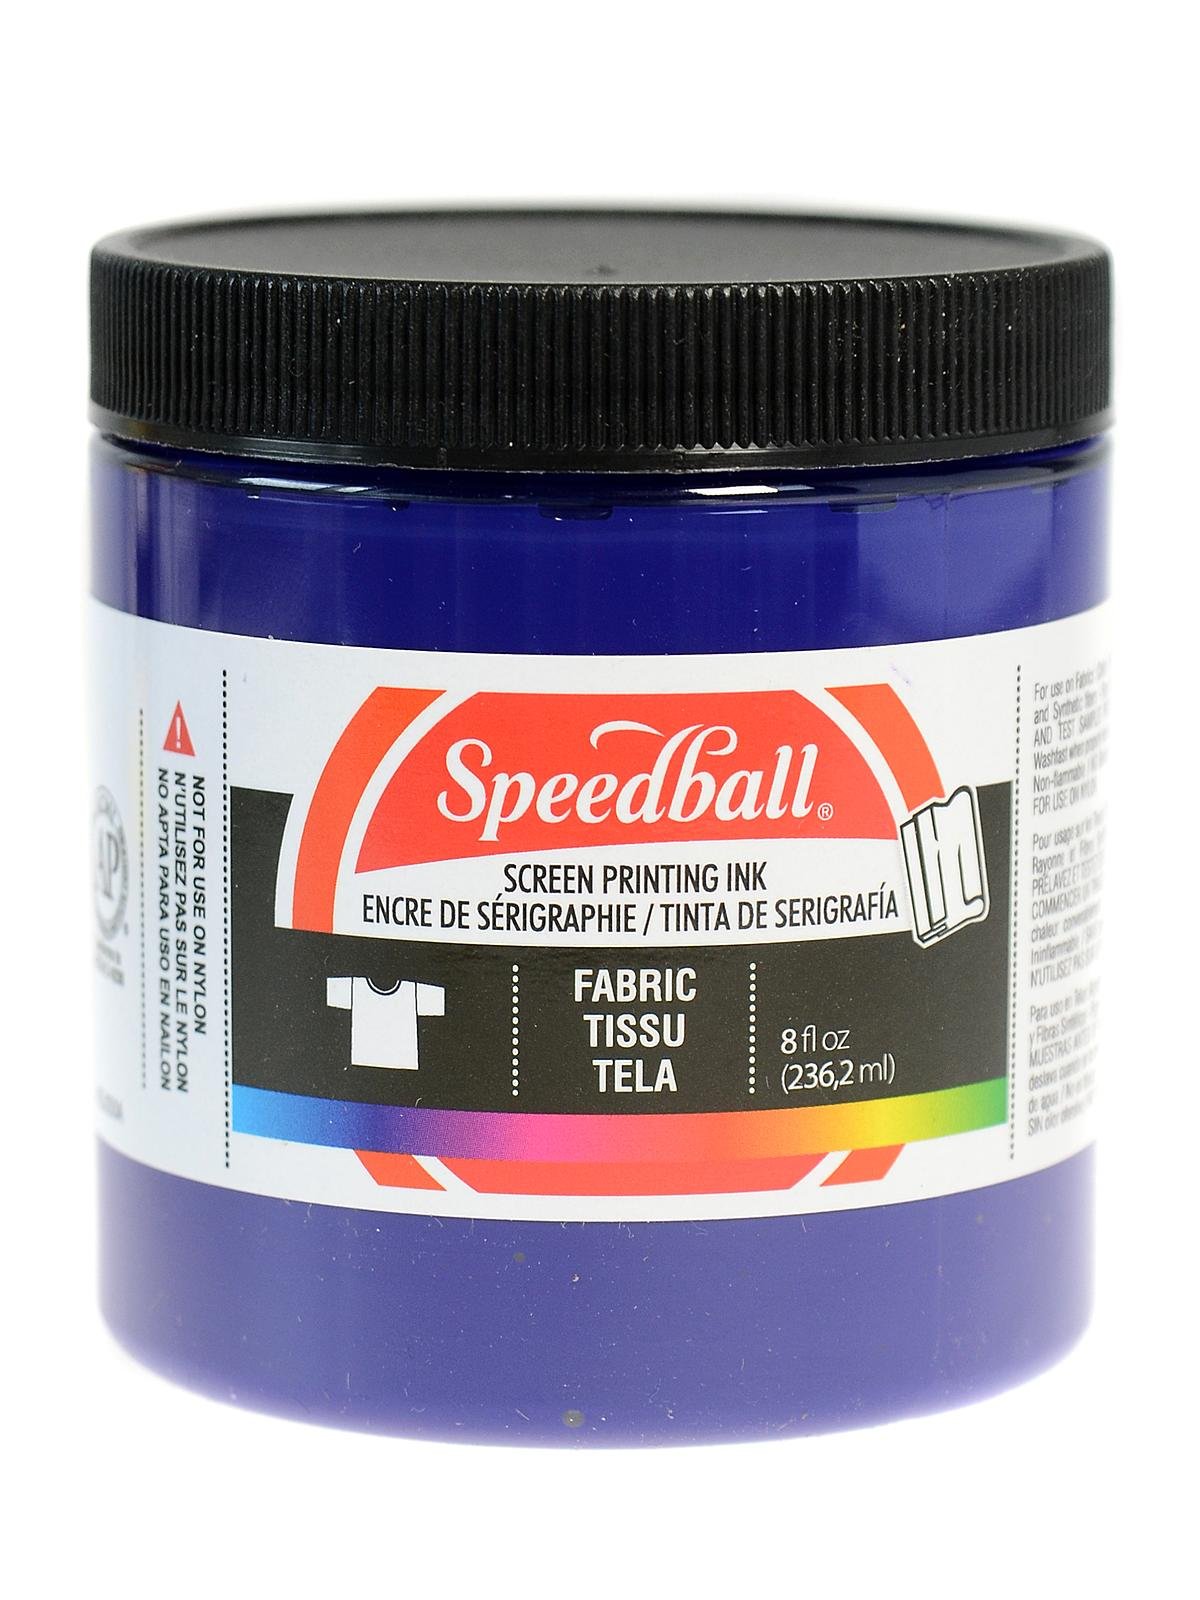 Speedball Fabric Screen Printing Ink 32 oz Jar - Violet